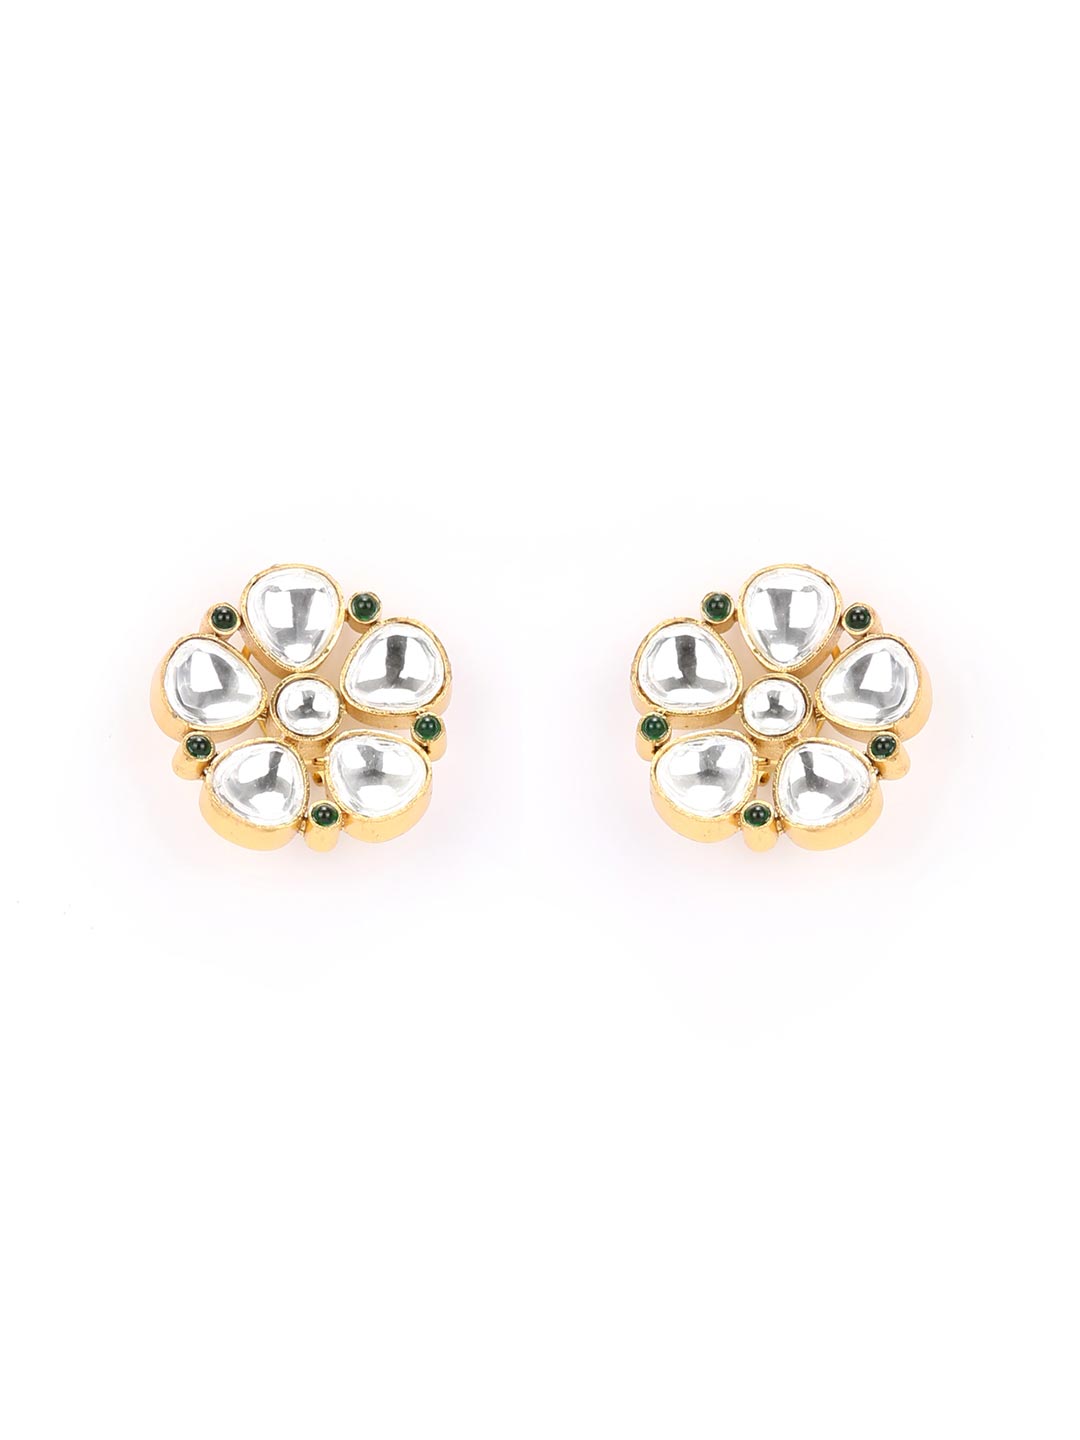 Round Brilliant 1.20 ctw VS2 Clarity, I Color Diamond 14kt White Gold  Flower Earrings | Costco